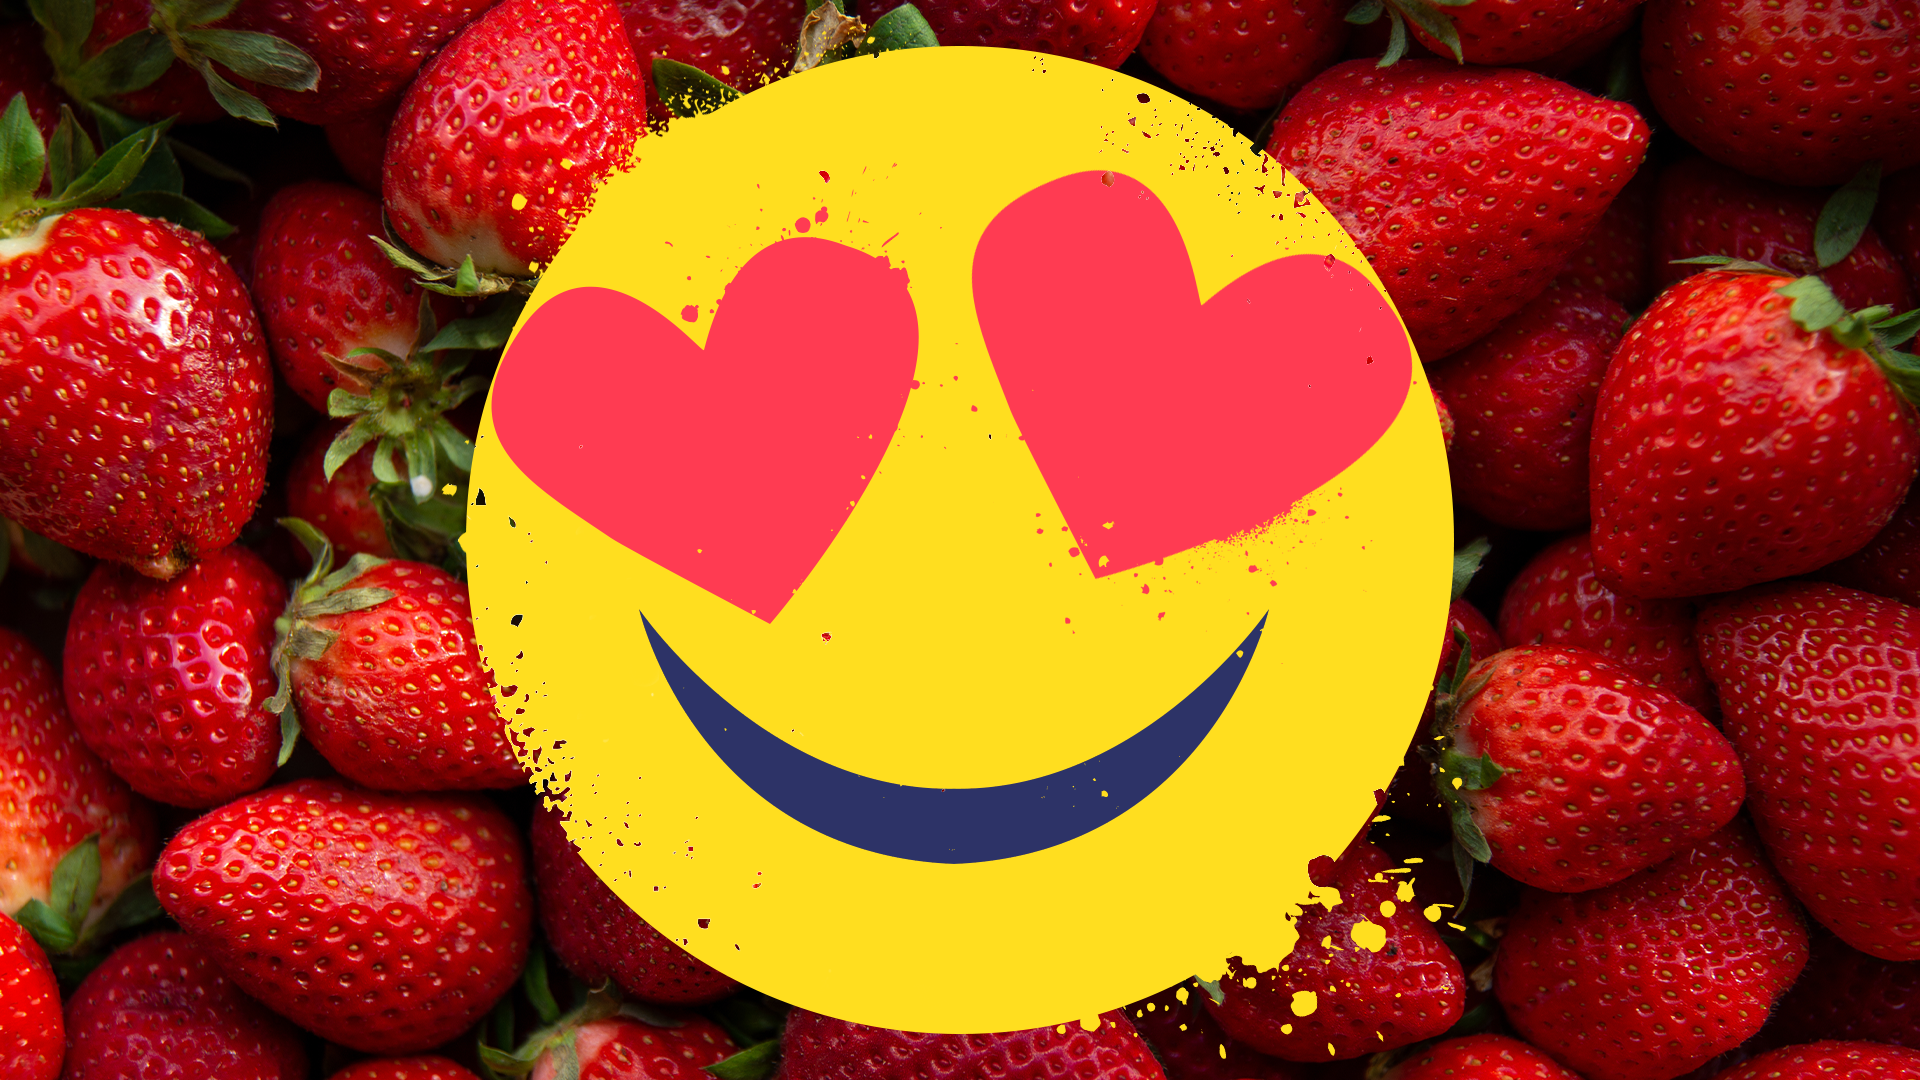 Strawberries with heart eyed emoji 